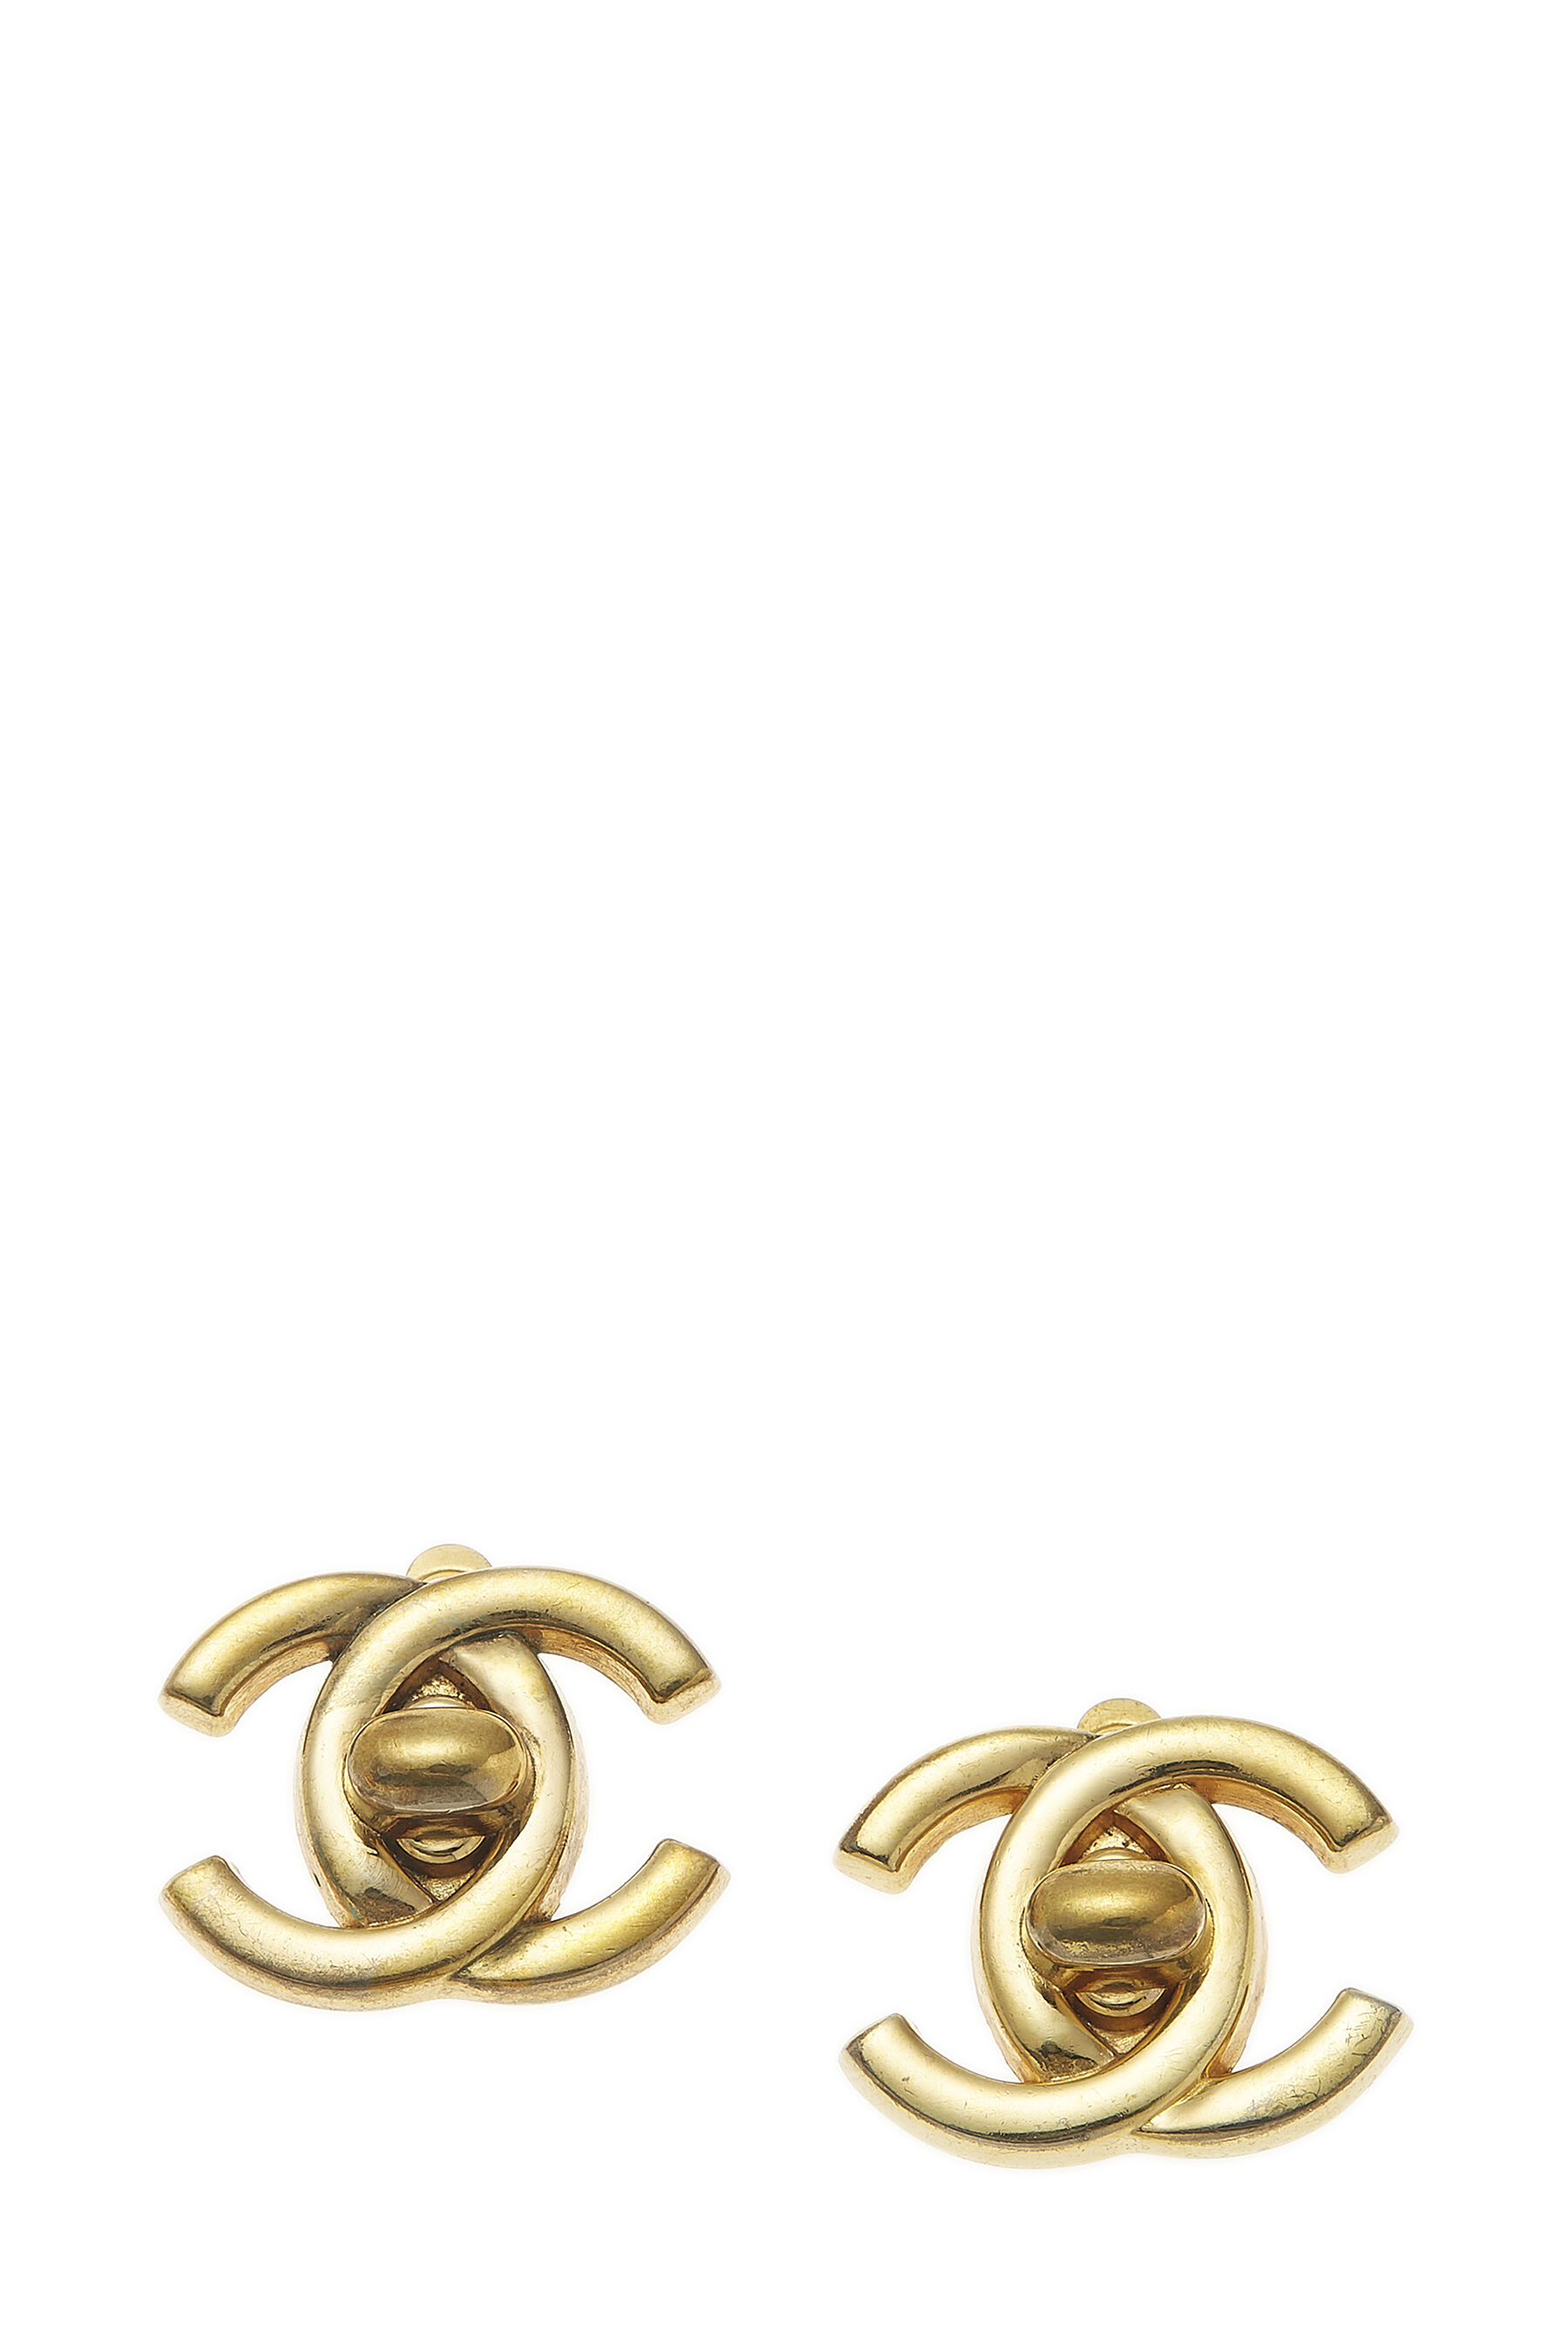 Chanel - Gold 'CC' Turnlock Earrings Medium